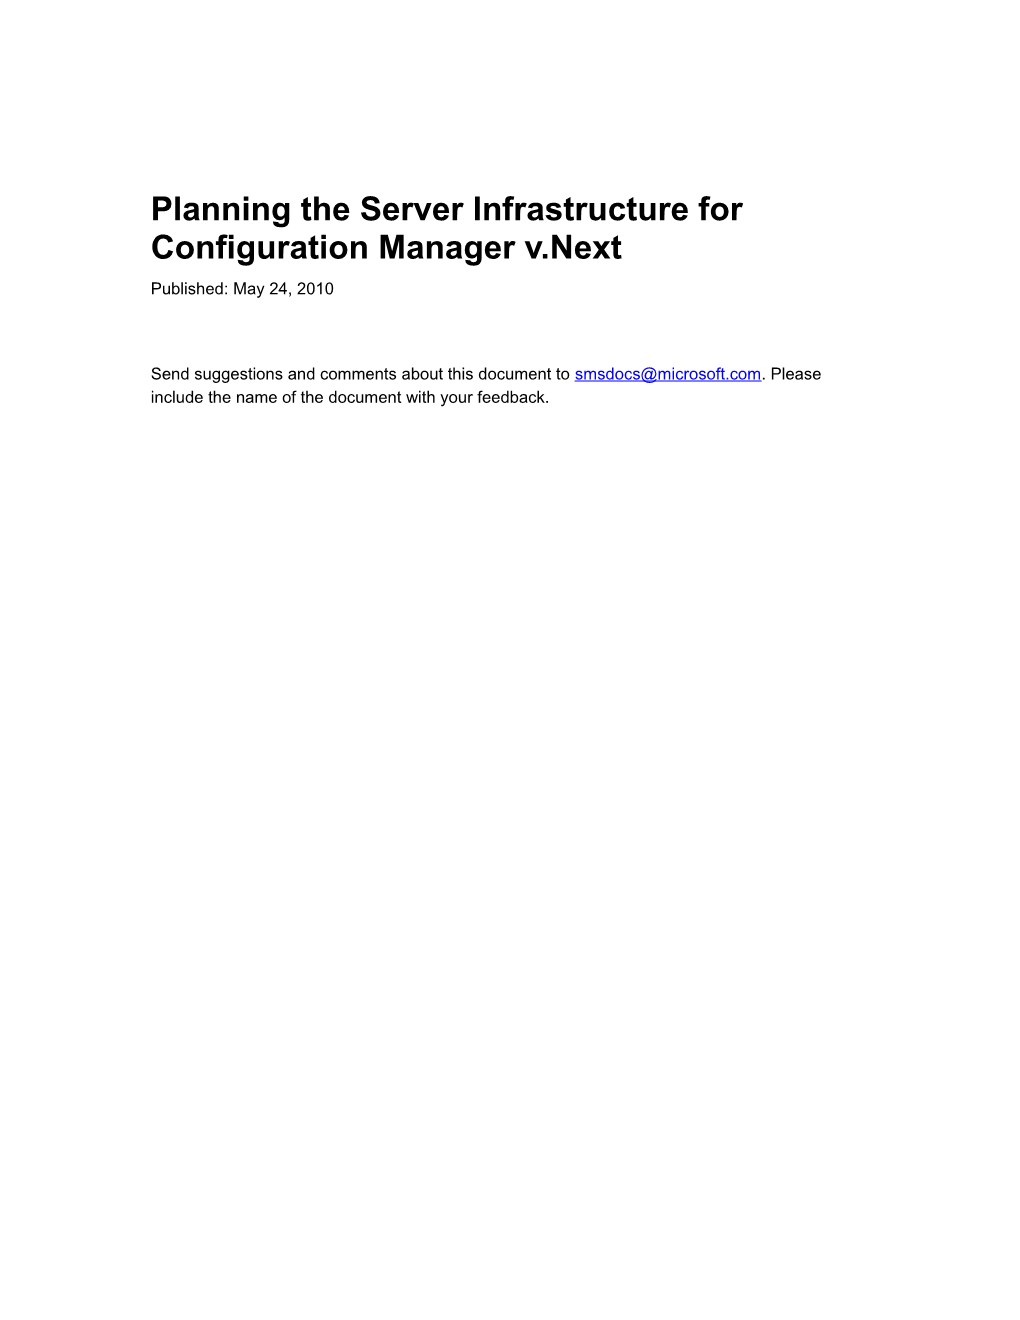 Planning the Server Infrastructure for Configuration Manager V.Next